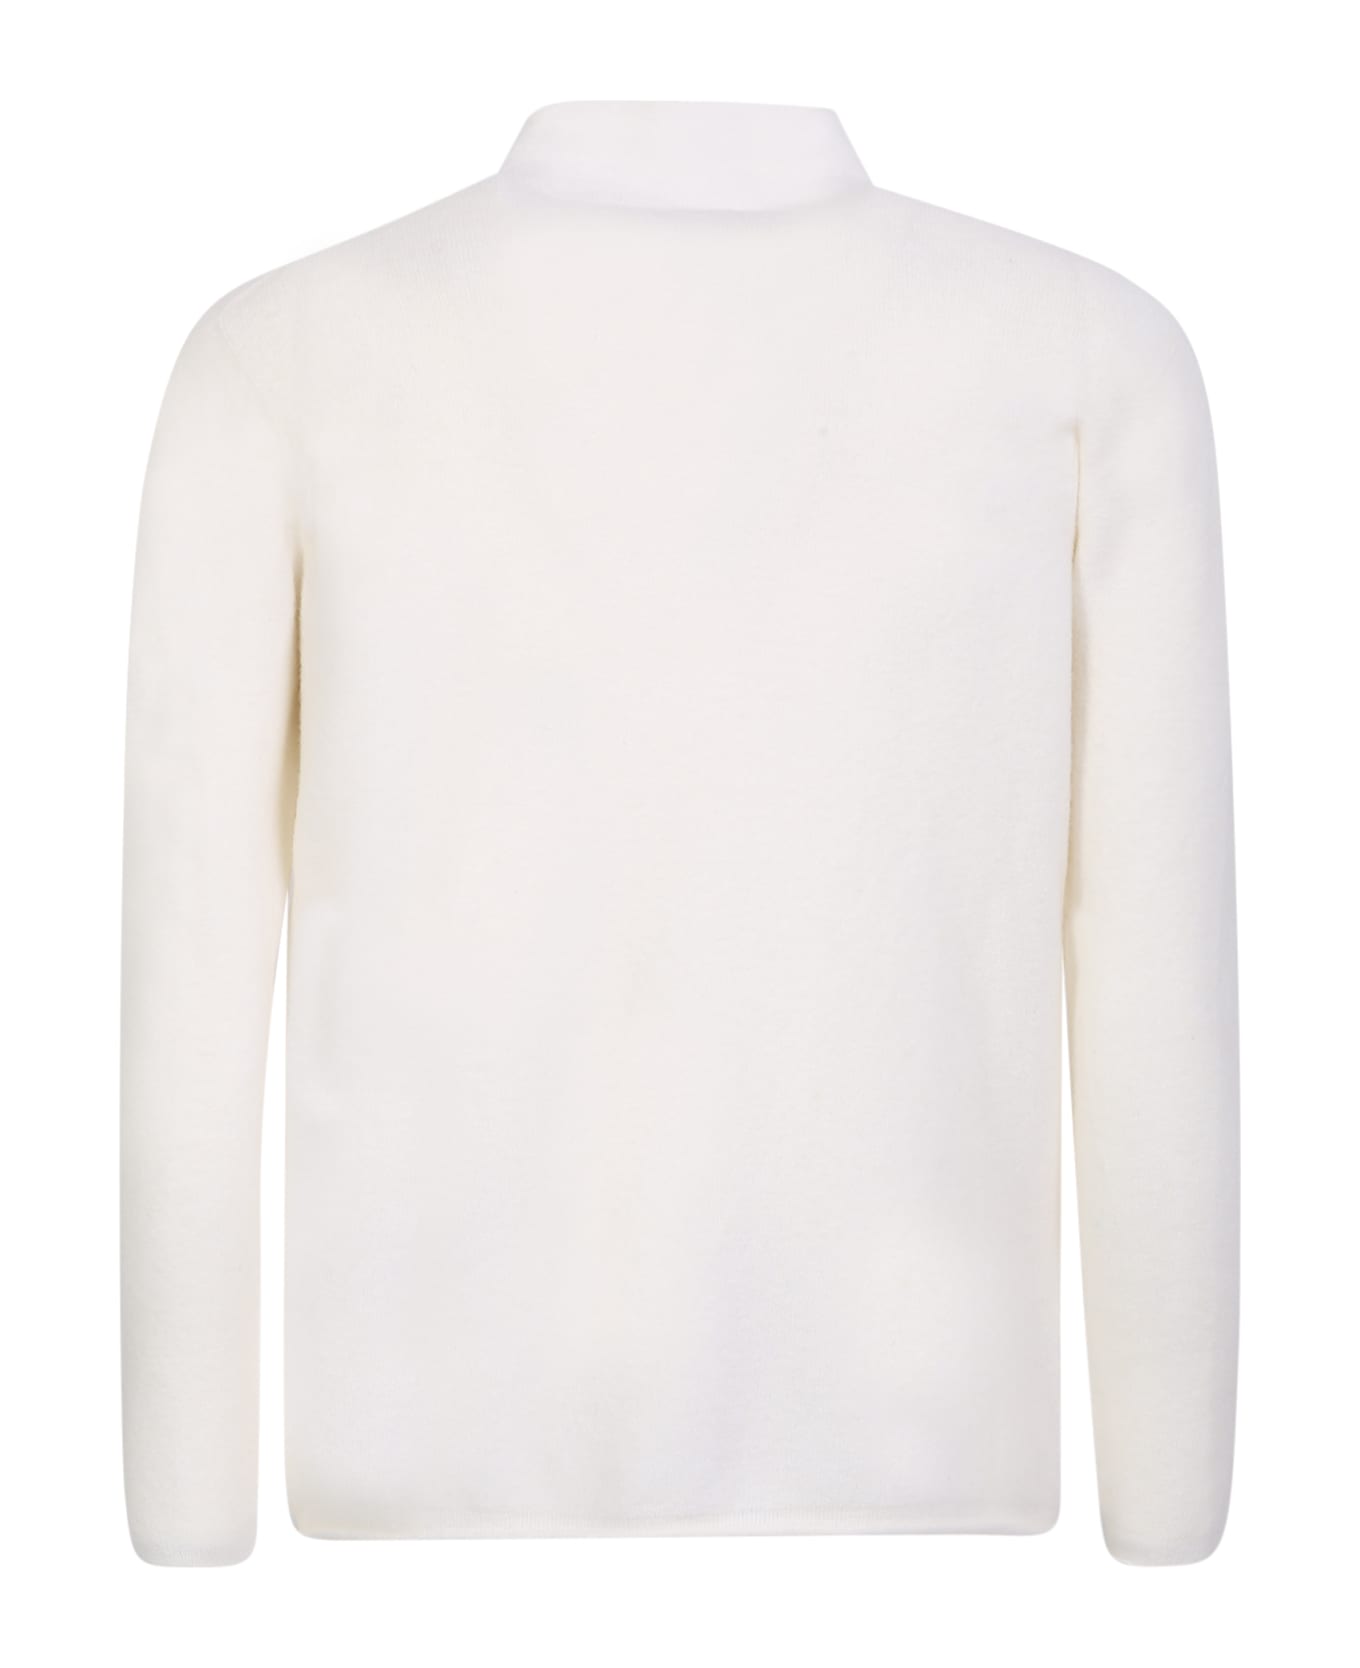 Original Vintage Style Original Vintage High-neck White Sweater - White ニットウェア